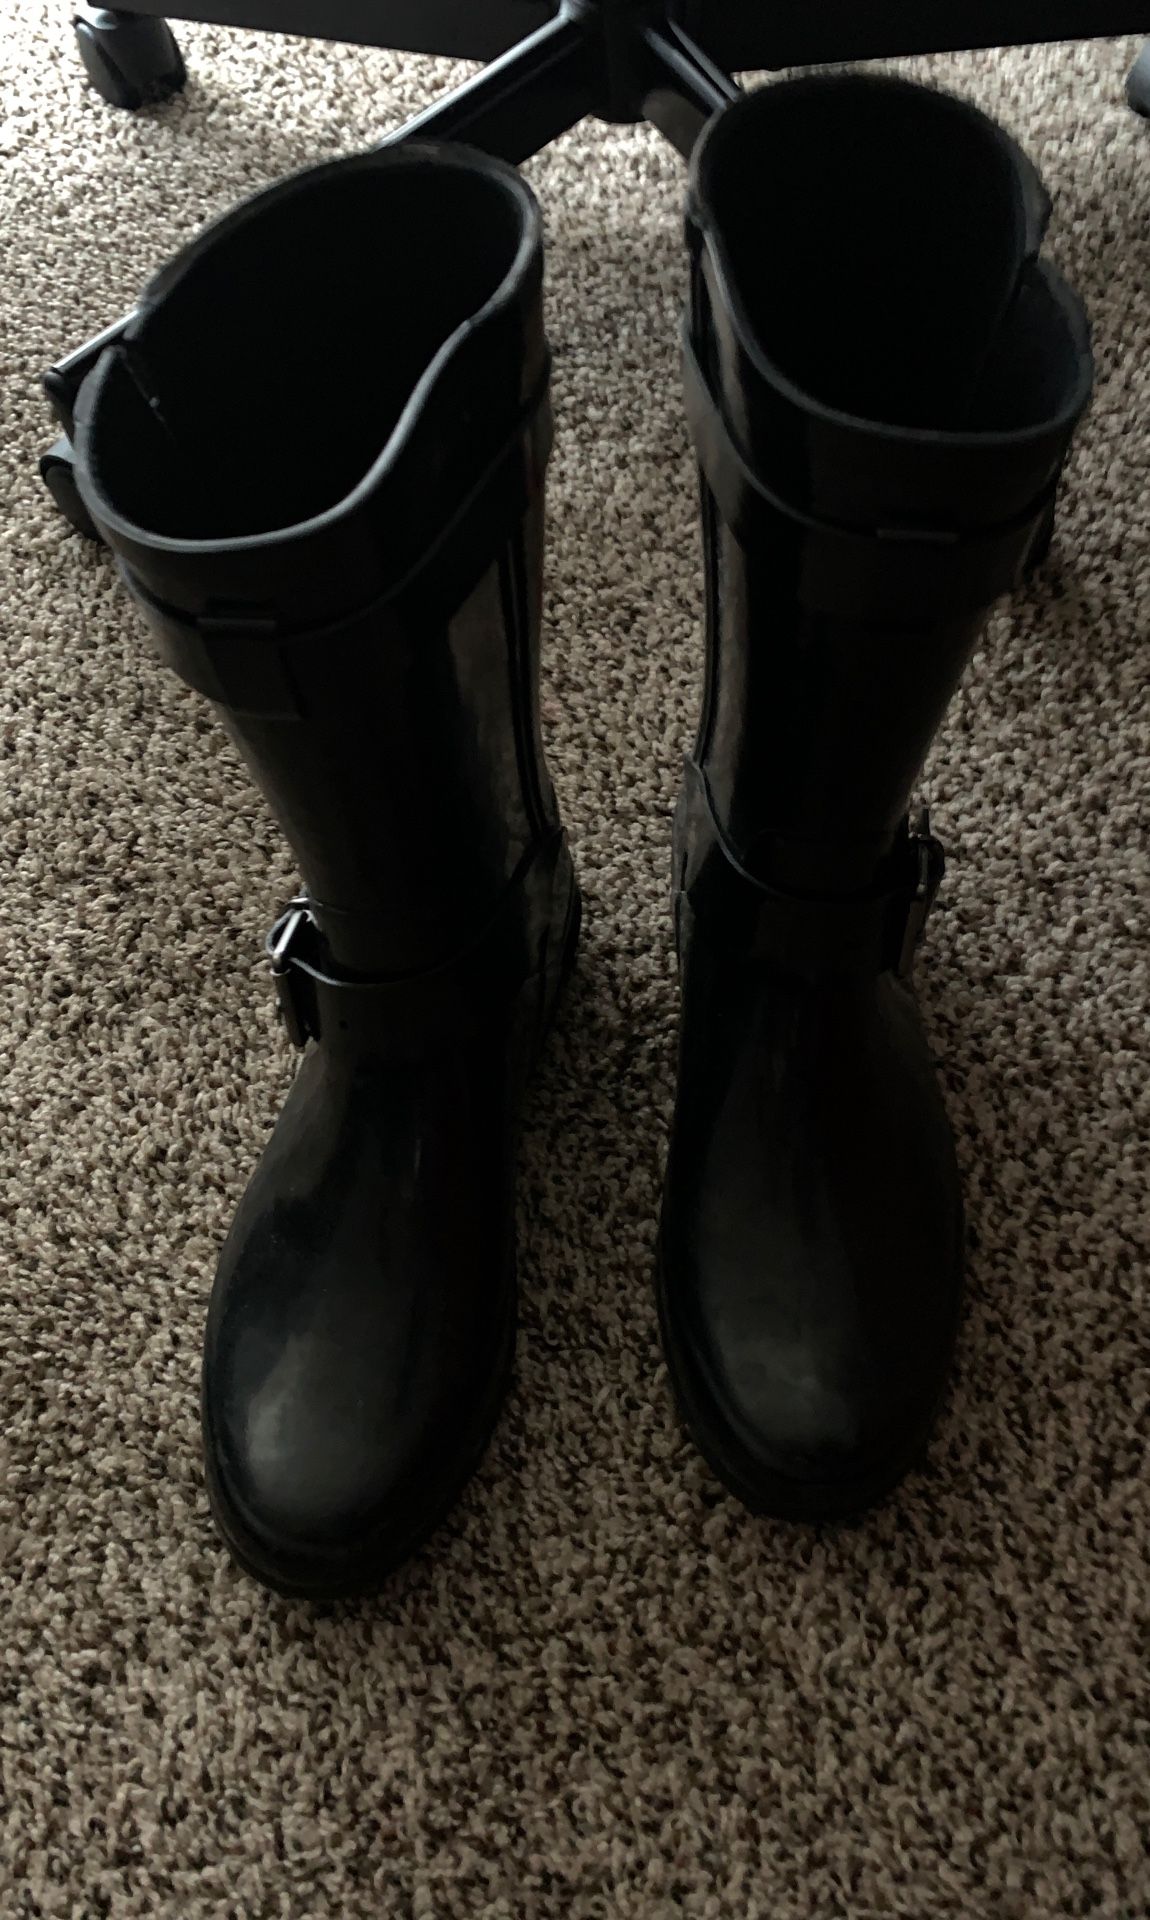 Ladies size 7 Burberry rain boots